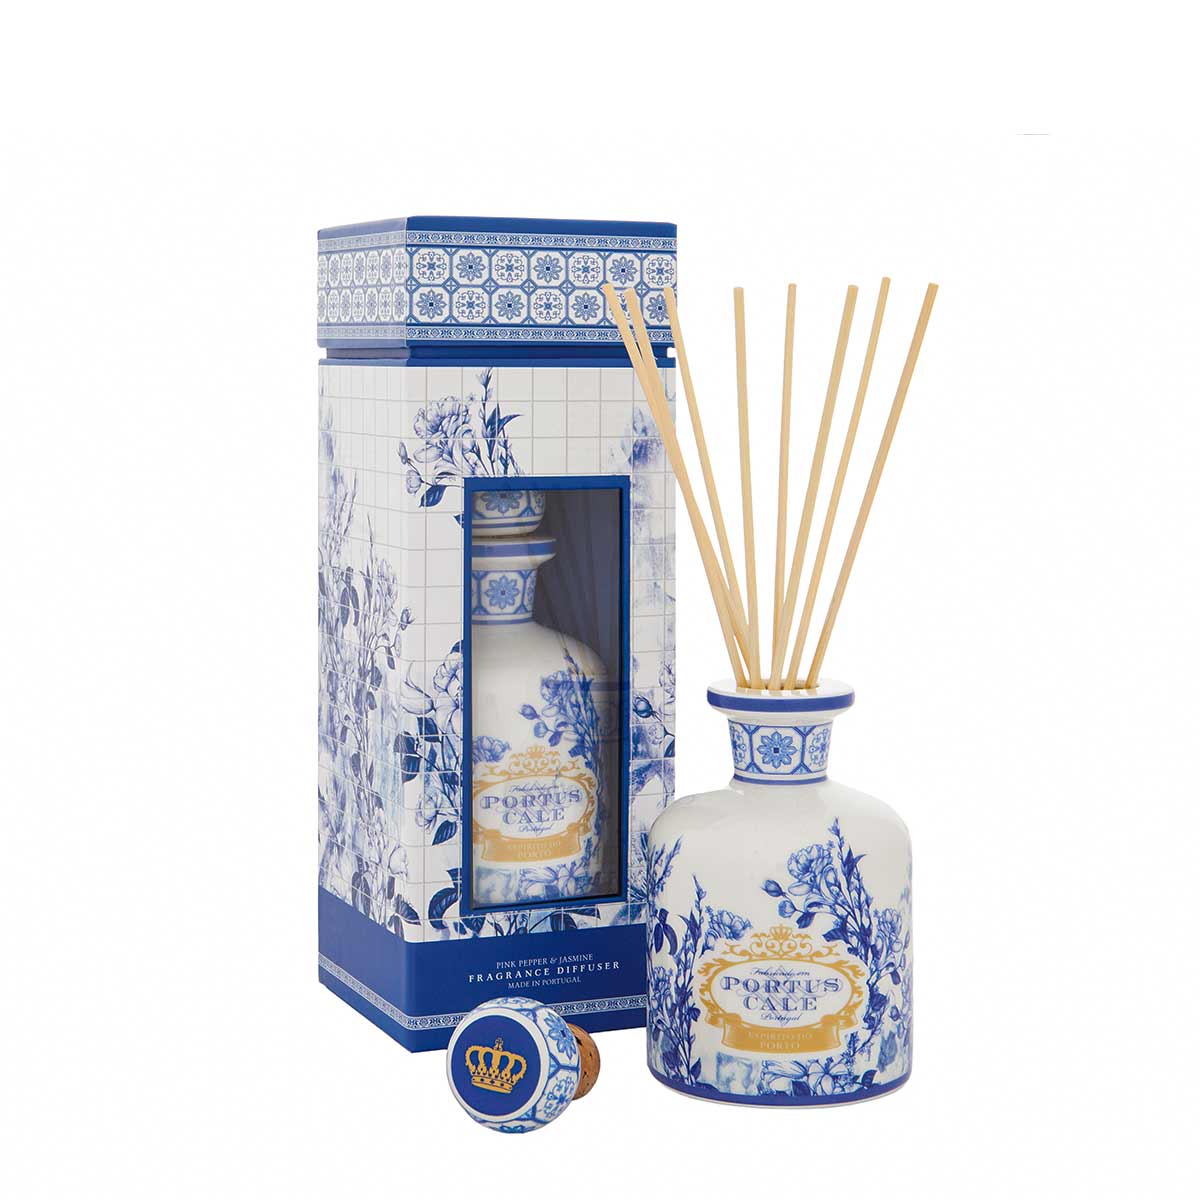 Castelbel Portus Cale Gold & Blue Fragrance Diffuser - 250Ml